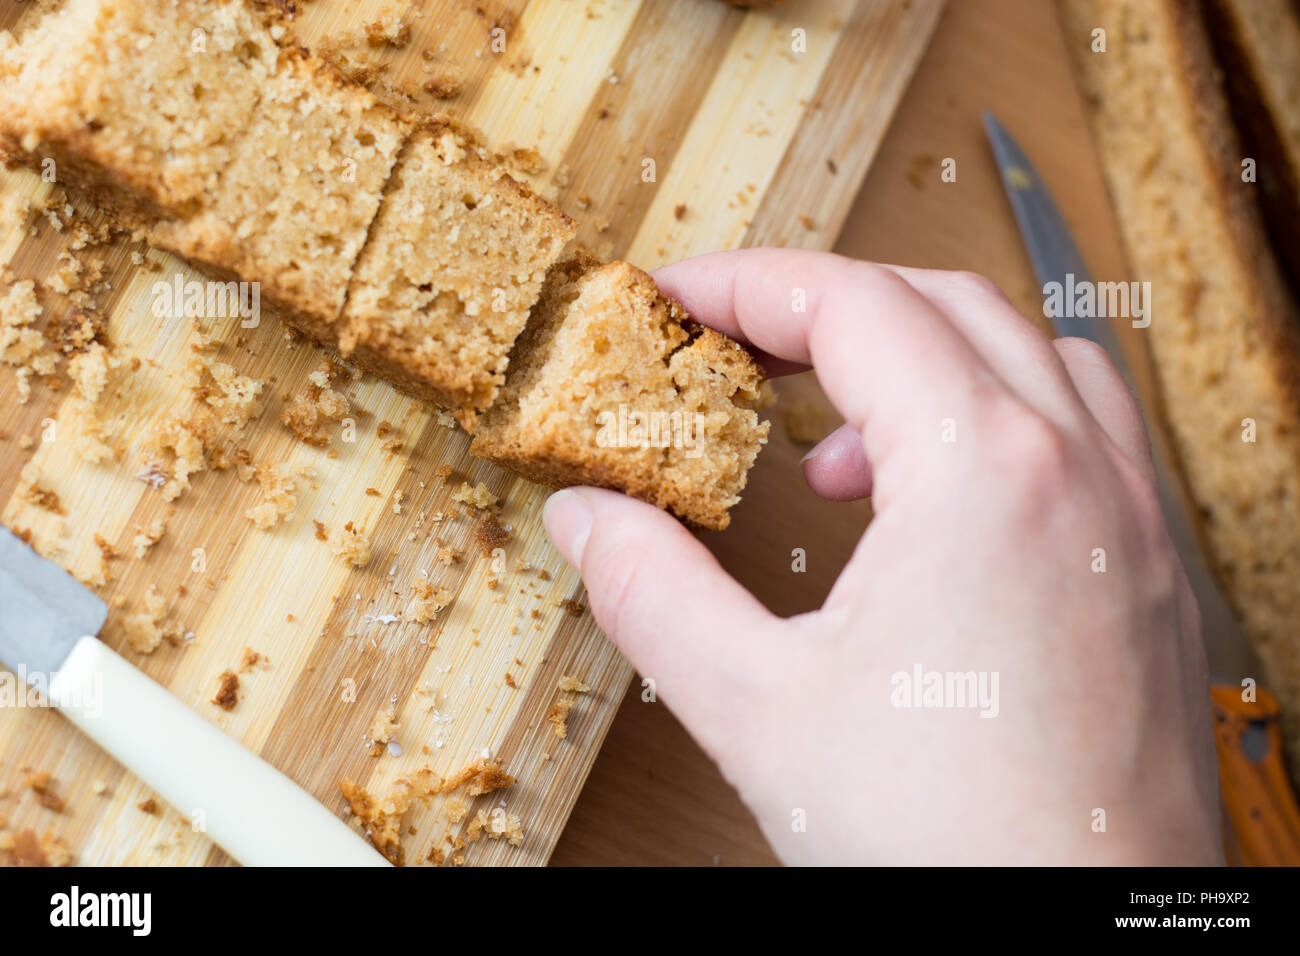 Female hands cutting and preparing cake crust Stock Photo